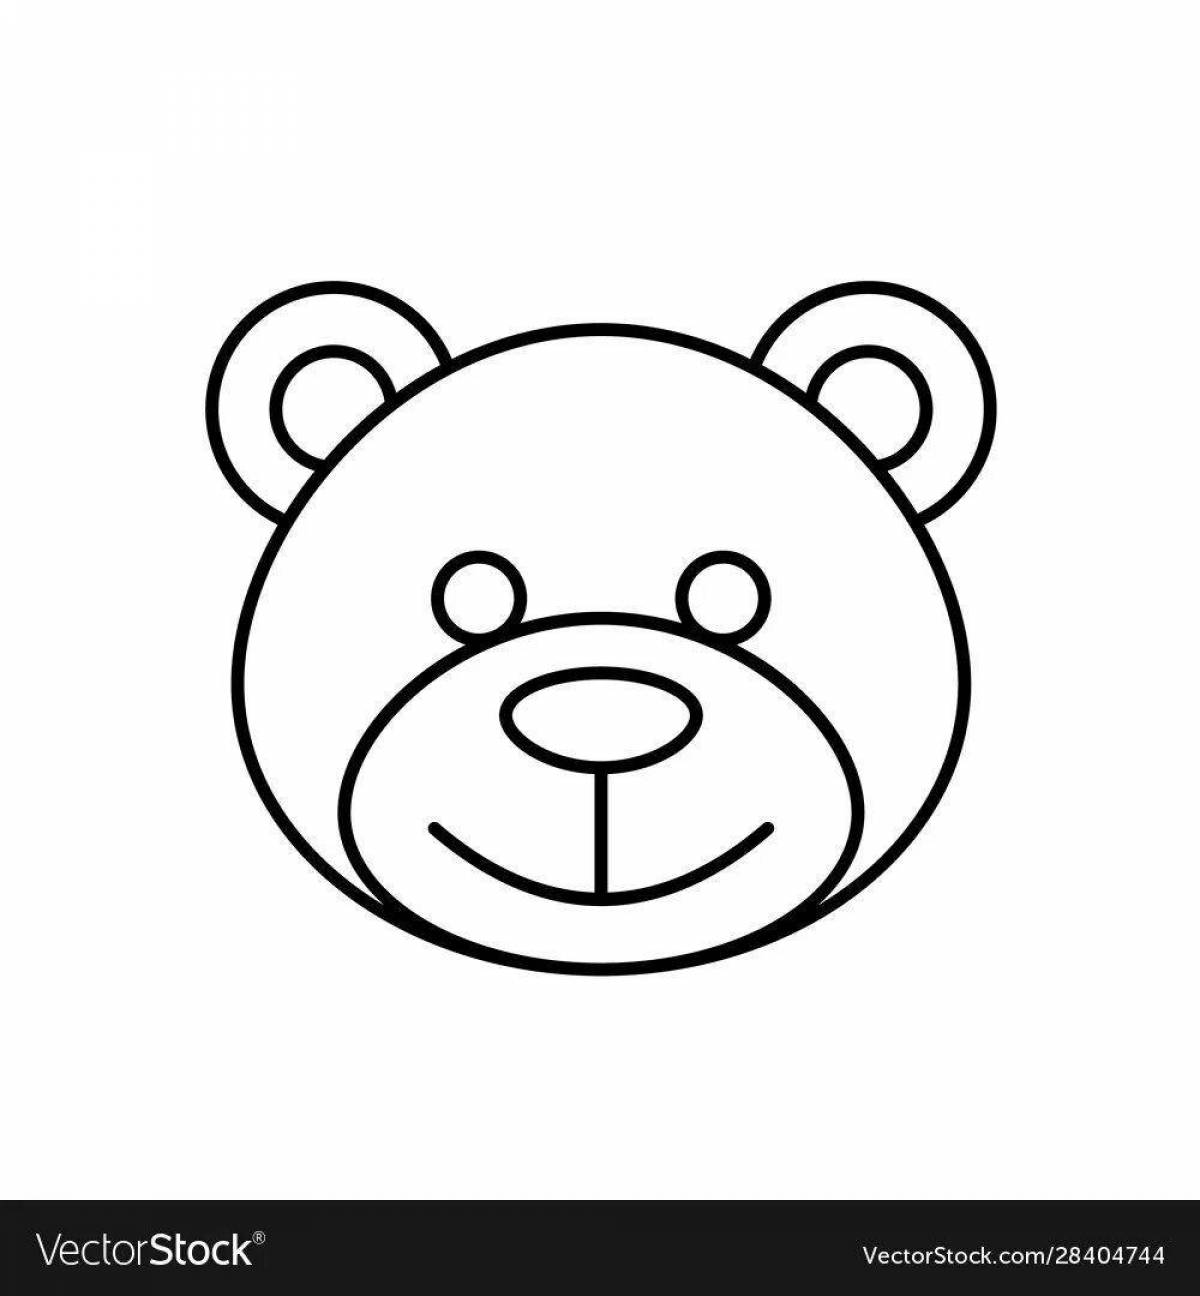 голова медведя рисунок - Поиск в Google | Bear face drawing, Angry bear, Illustration